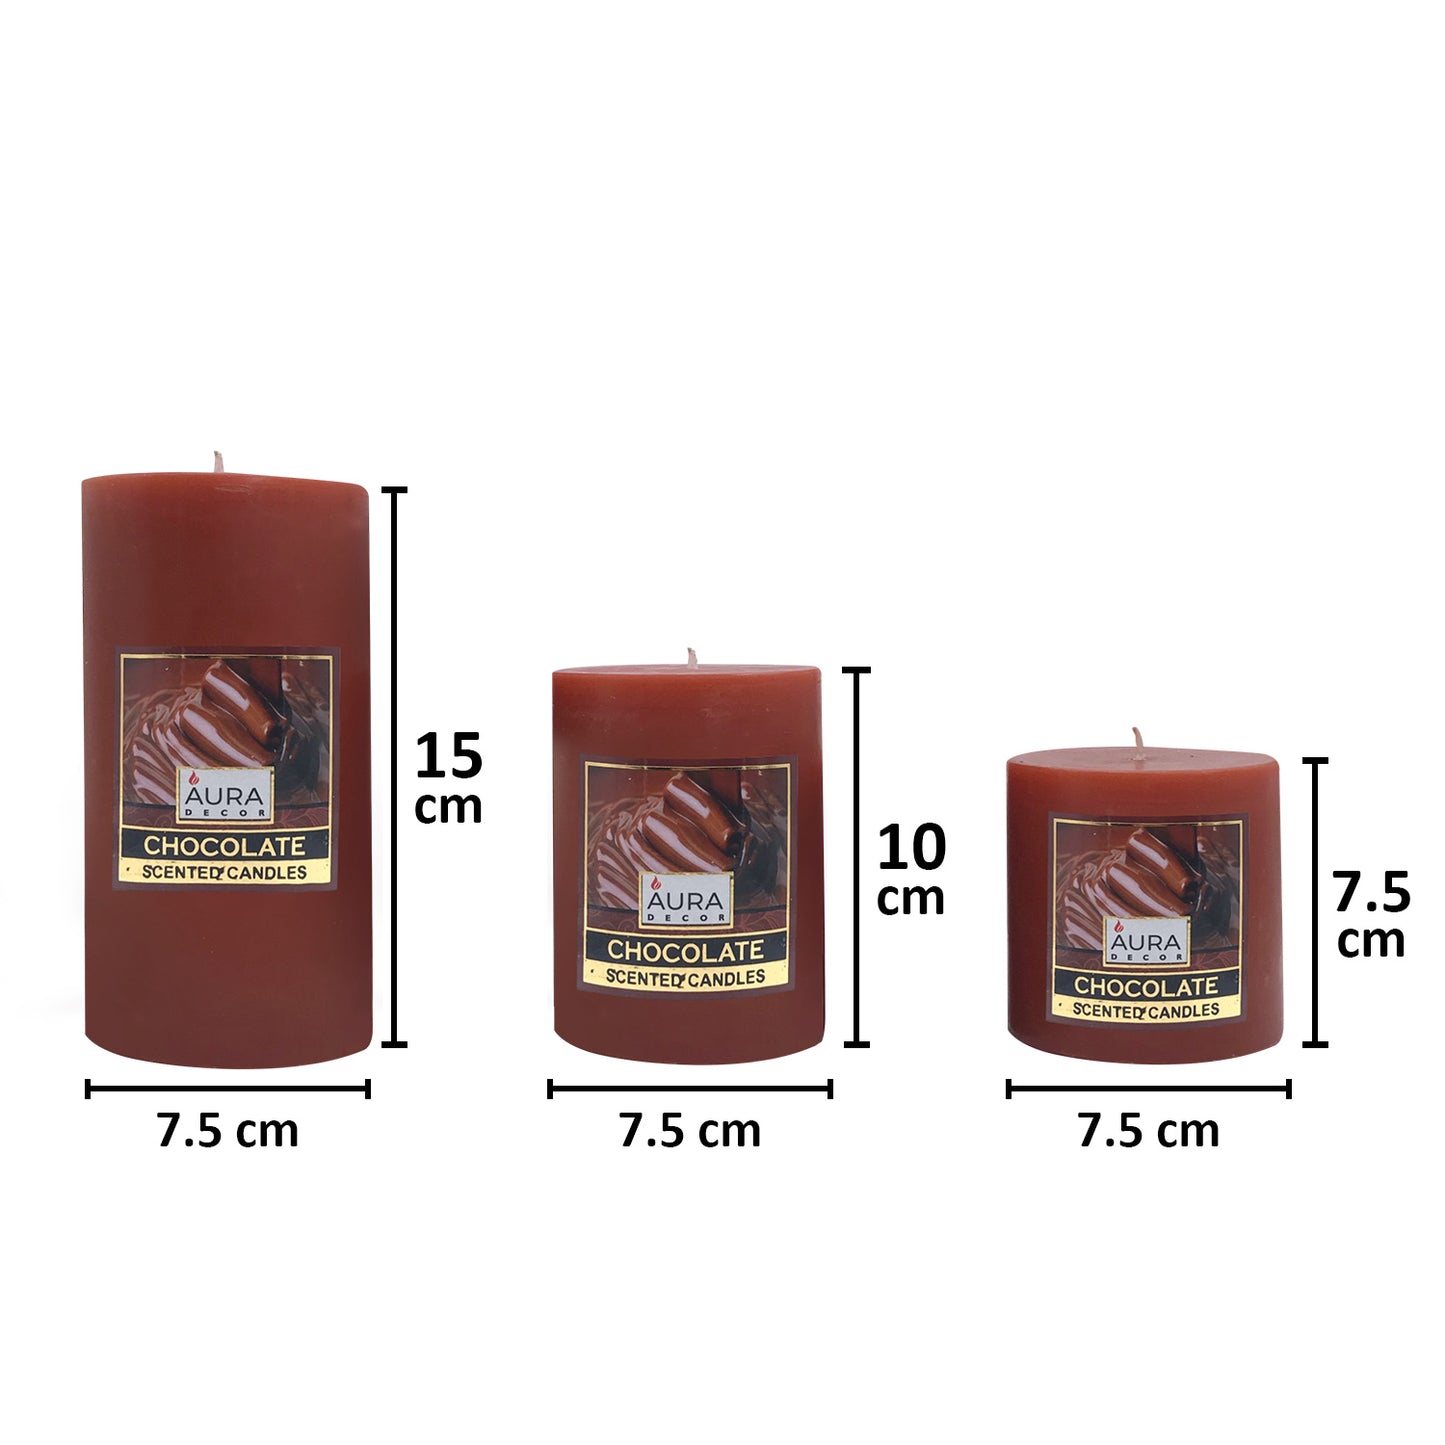 AuraDecor Pillar Candle Gift Set of 3 ( 3*3, 3*4, 3*6 inches ) ( Chocolate )